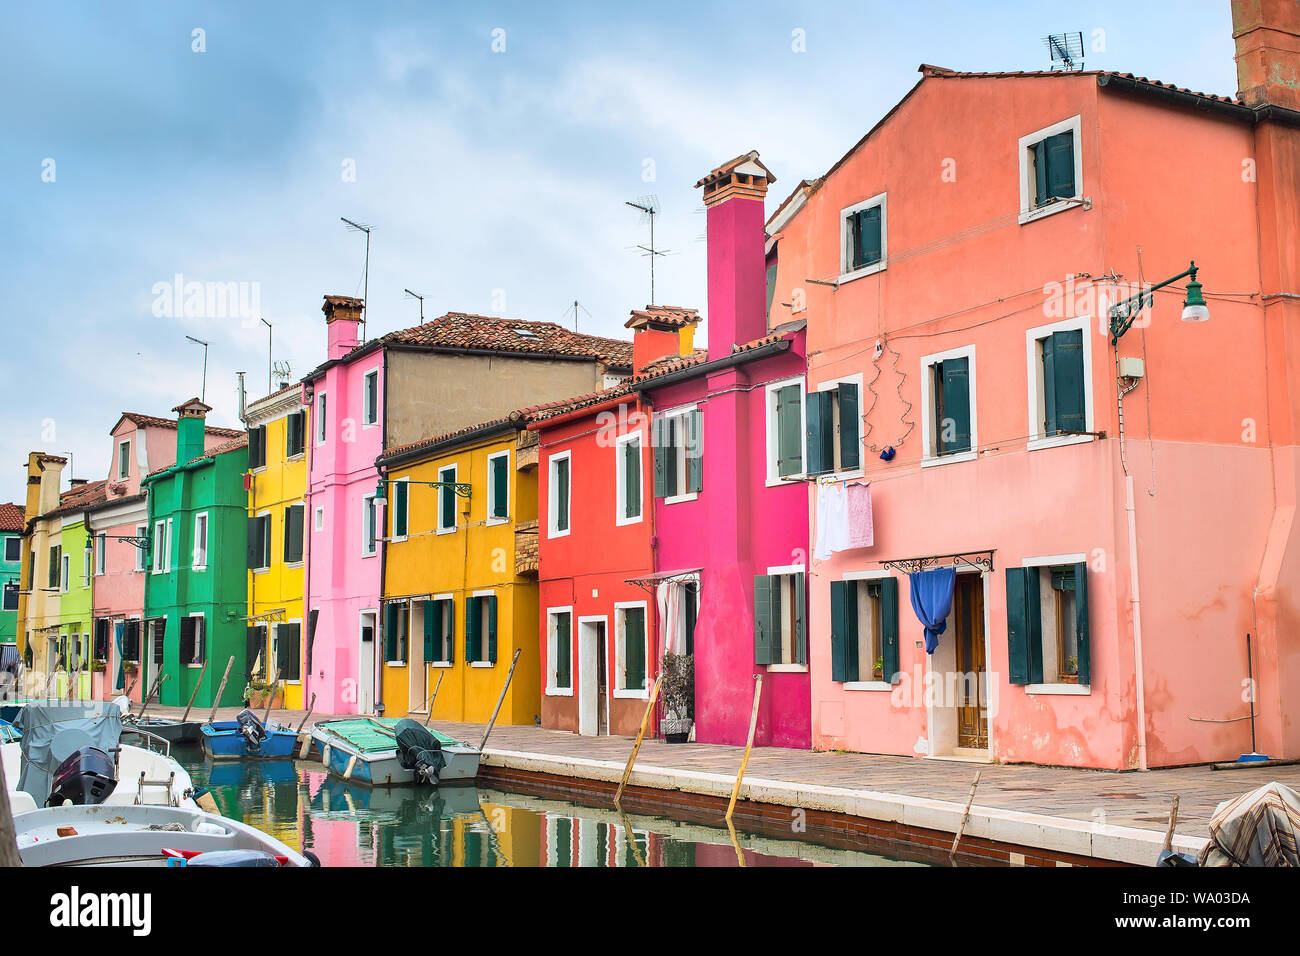 Venice landmark, Burano island with colorful houses and boats, Italy Stock Photo